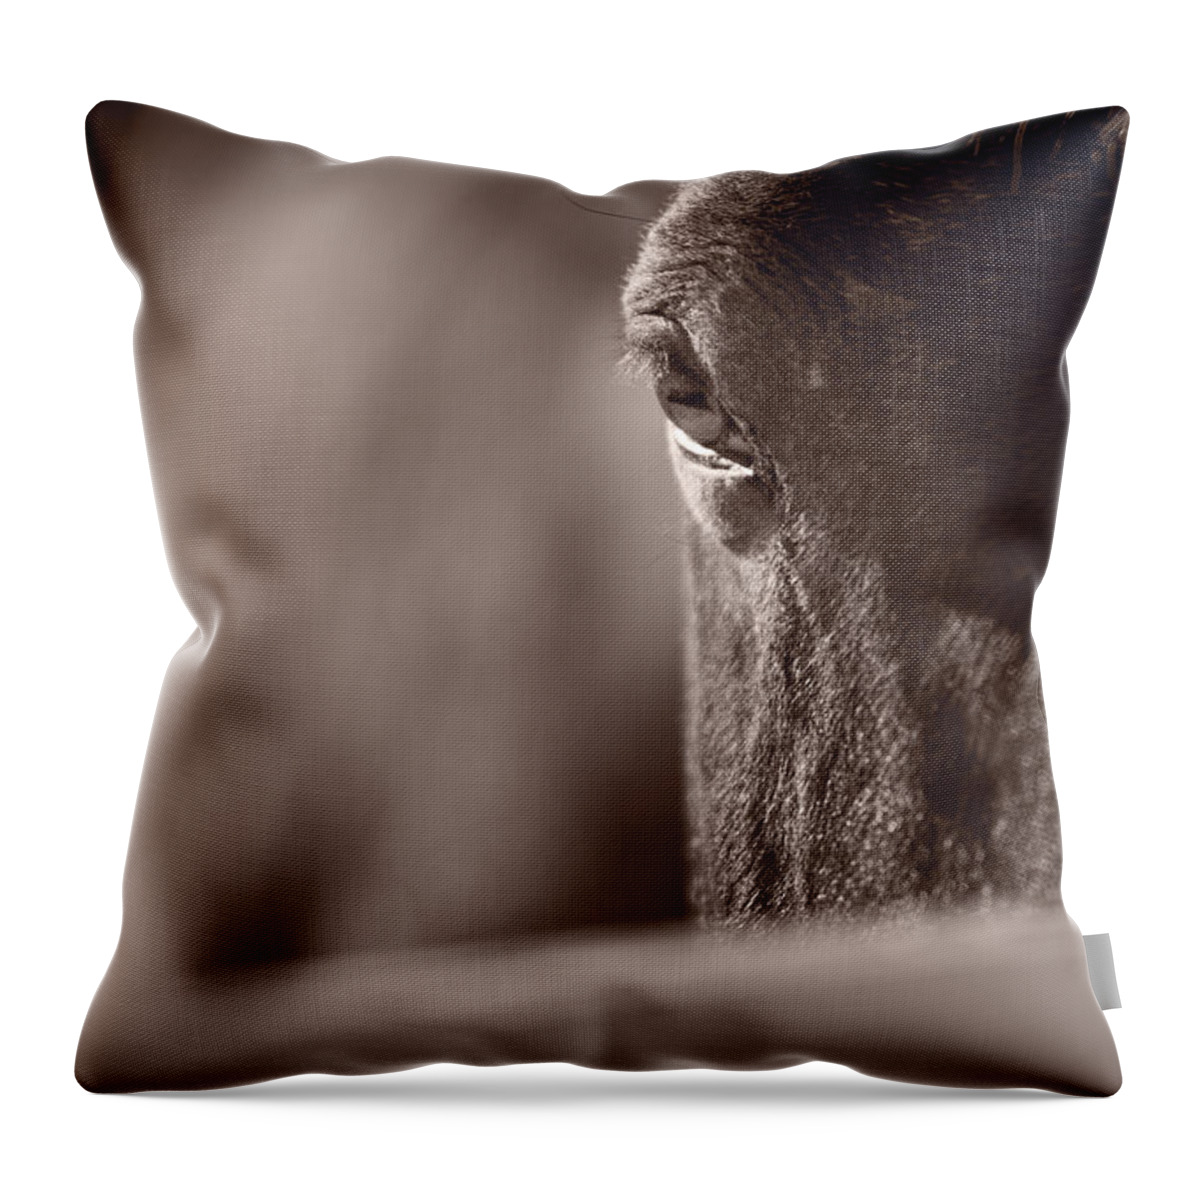 Horse Throw Pillow featuring the photograph Portrait of a Horse Kentucky by Steve Gadomski